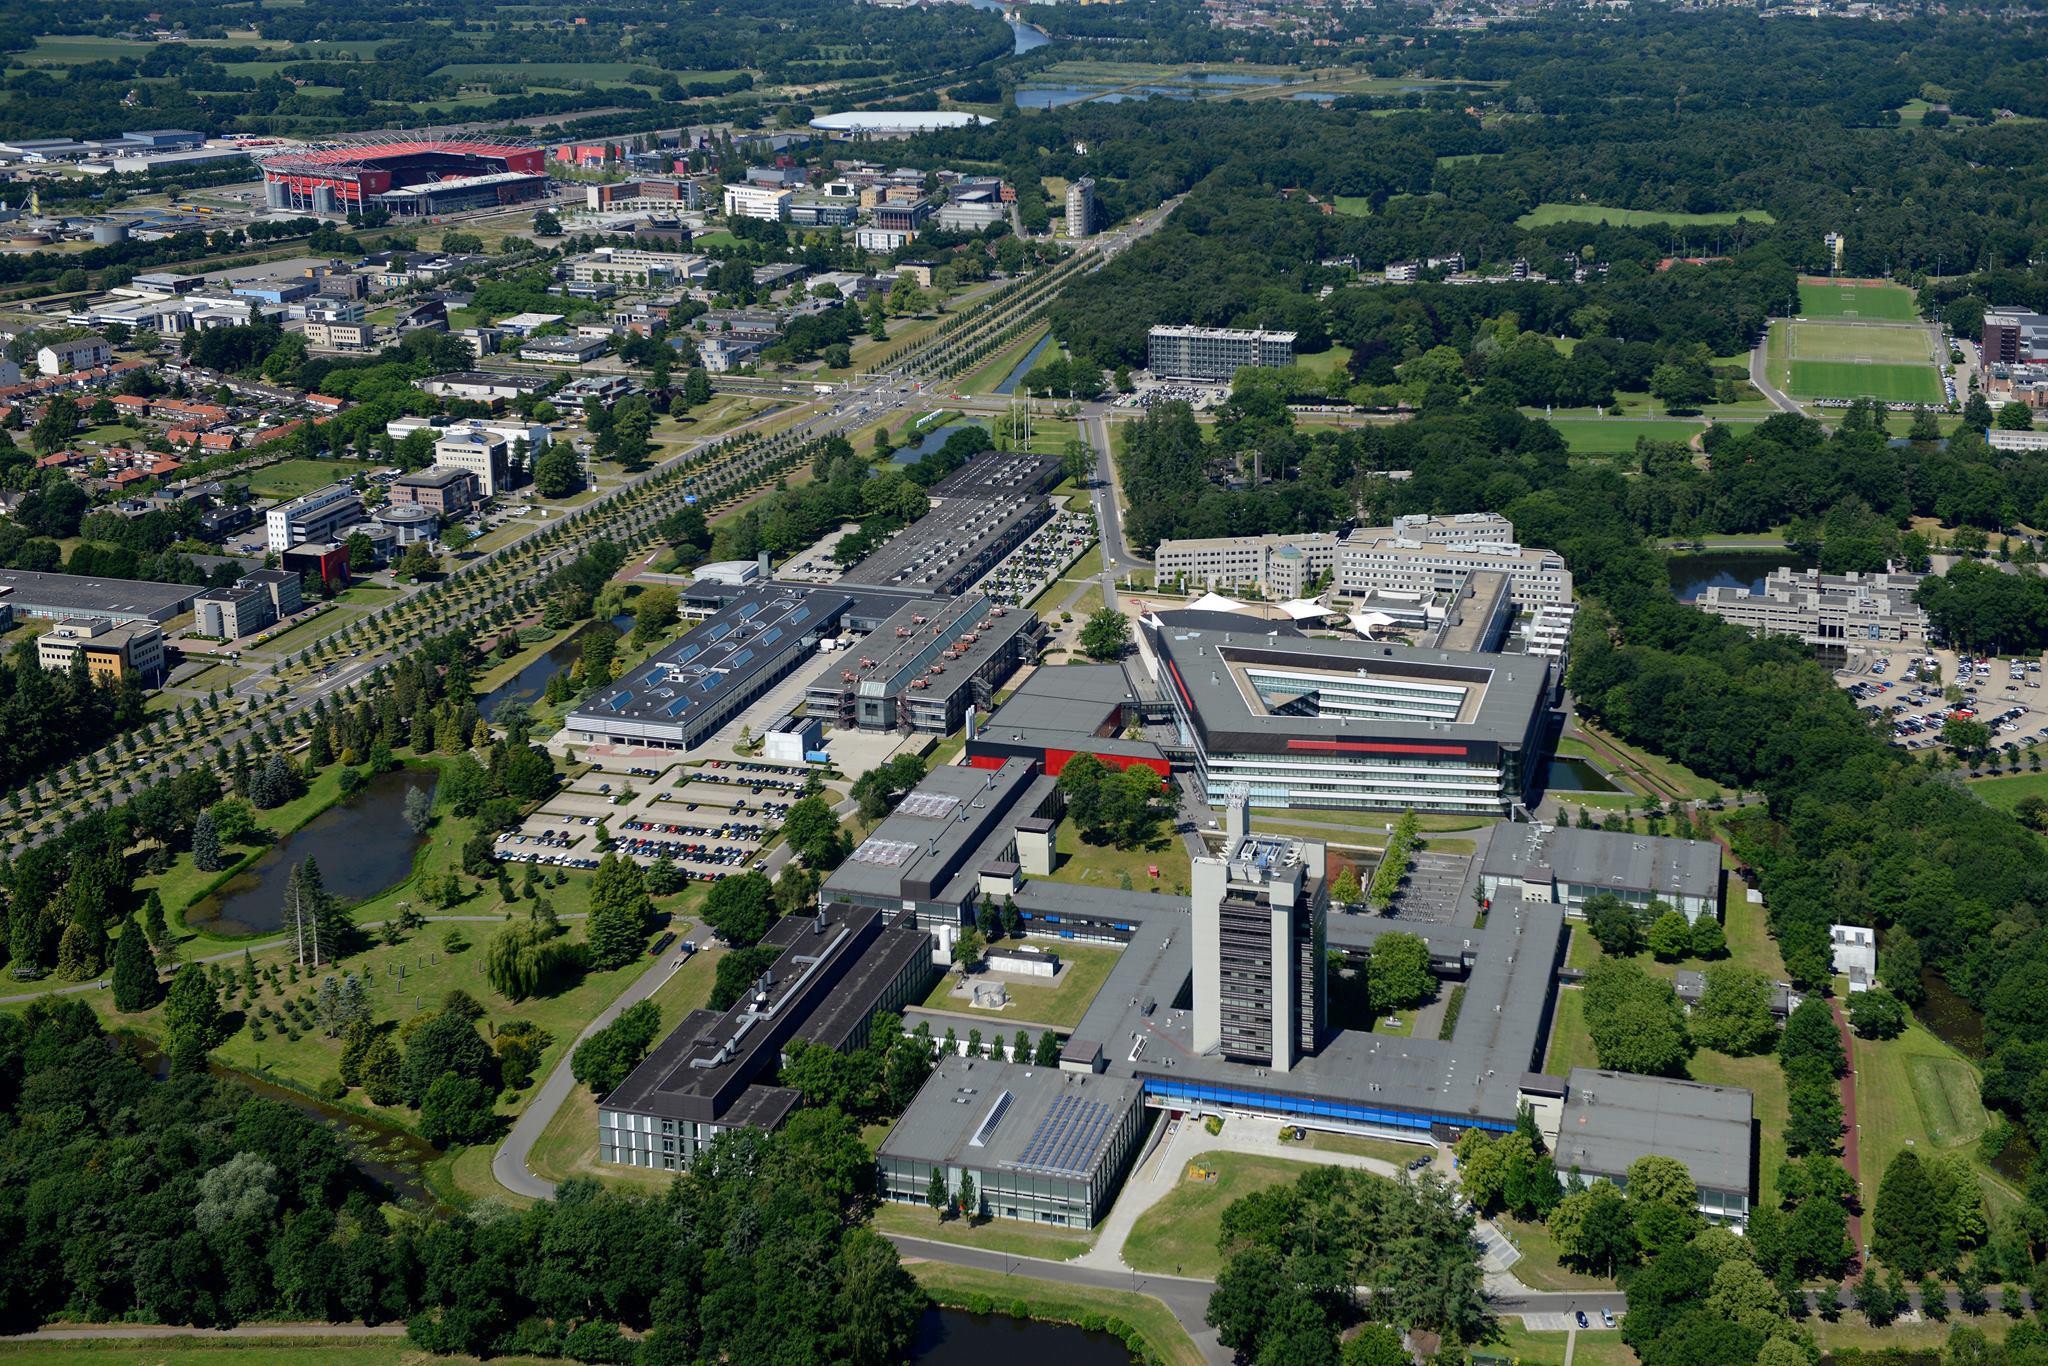 University of Twente (Pathway College)